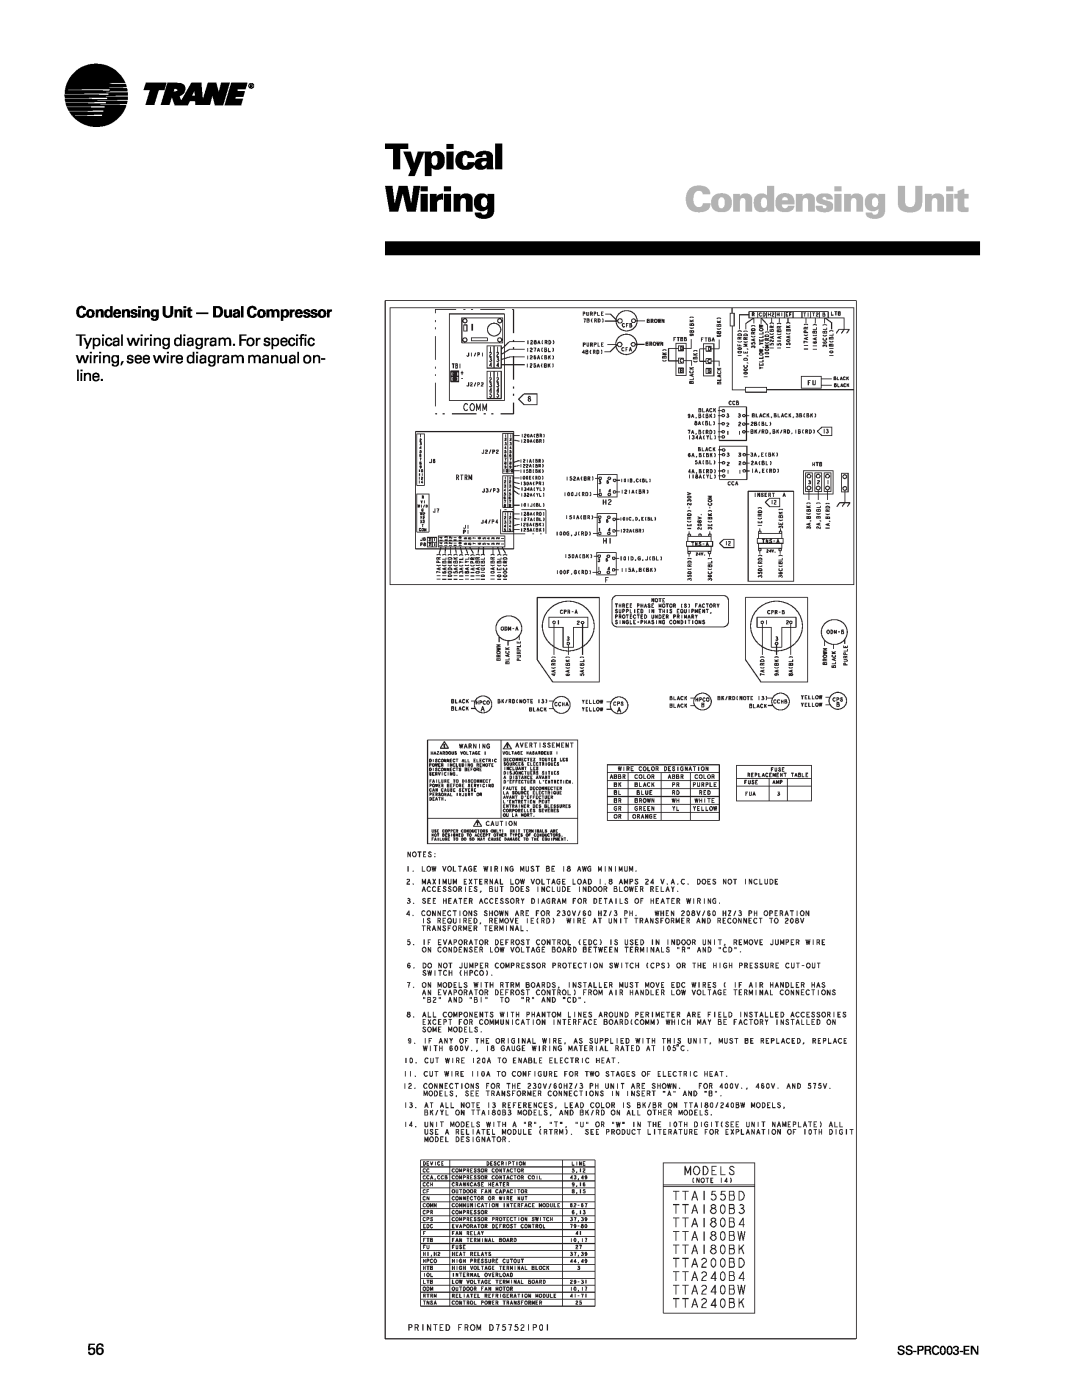 Trane SS-PRC003-EN manual Condensing Unit - Dual Compressor, Typical, Wiring 